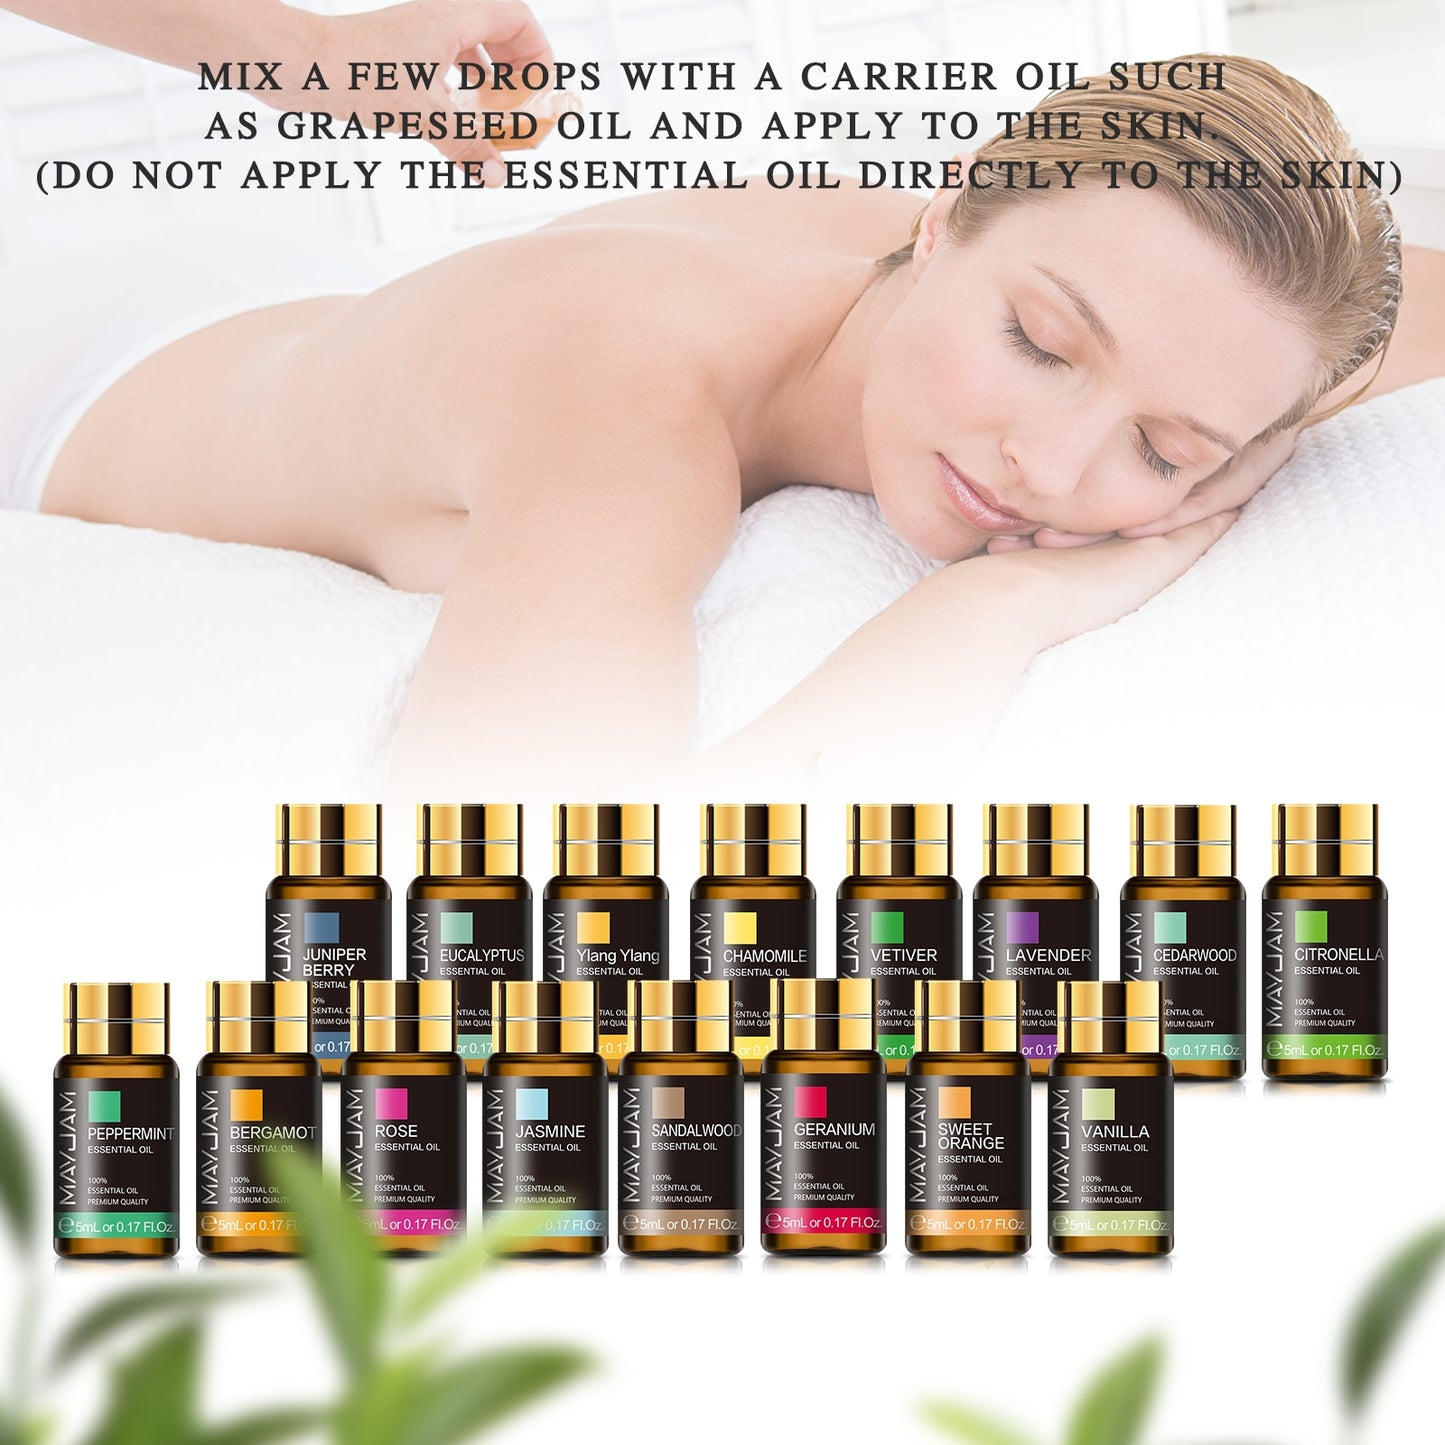 28pcs Pure Natural Essential Oils Gift Set: Massage, Stress Relief, Shower Diffuser, Aroma Oil, Lavender, Vanilla, Sage Jasmine, Rose, and More... - adamshealthstore